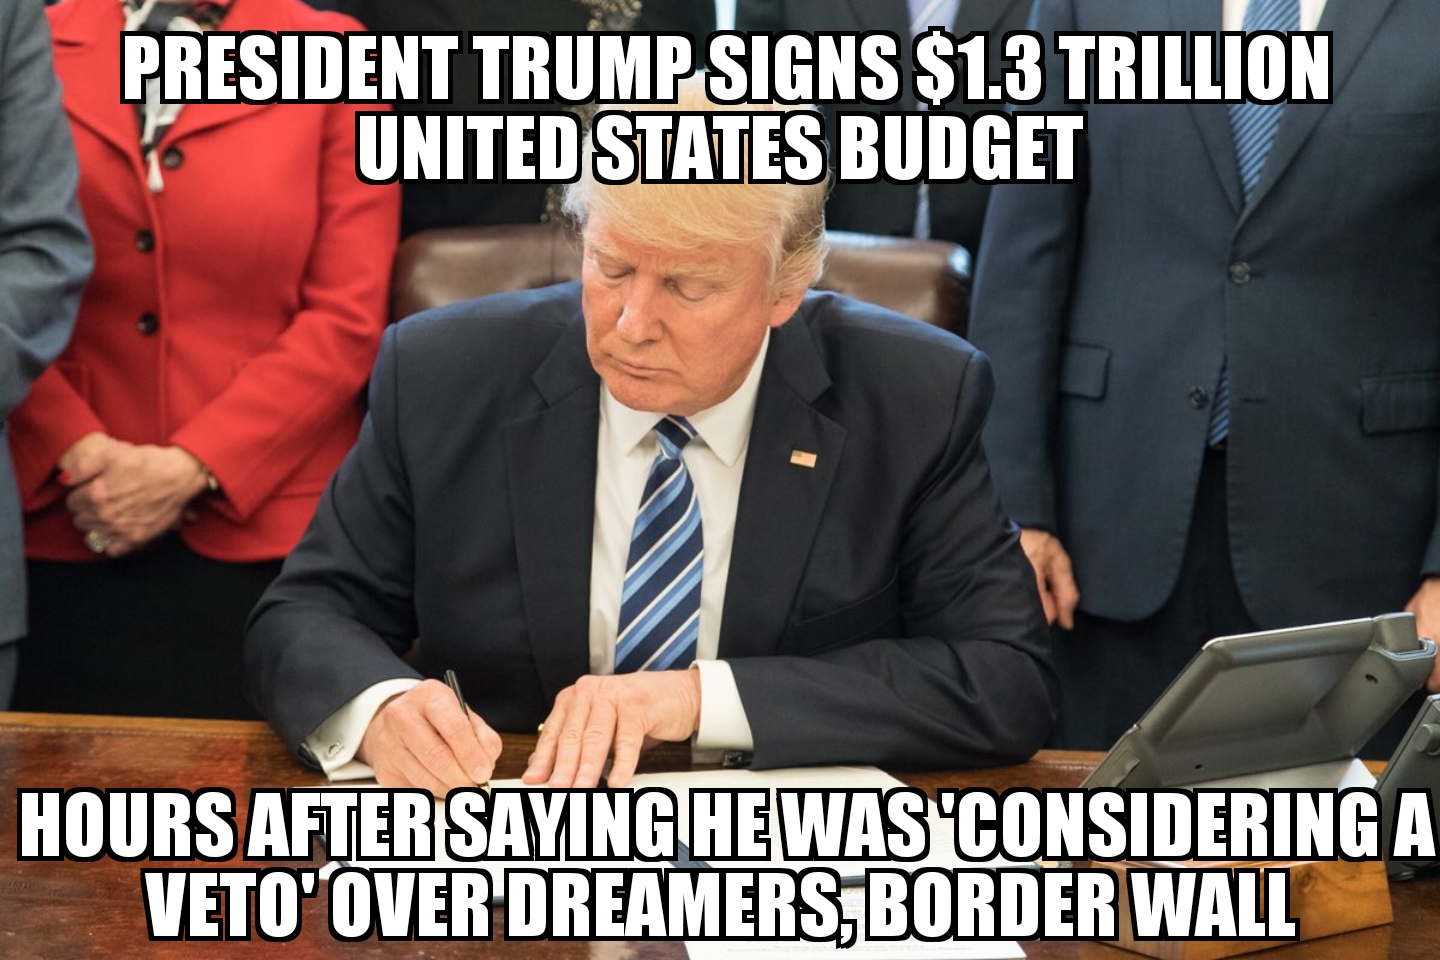 Trump signs U.S. budget